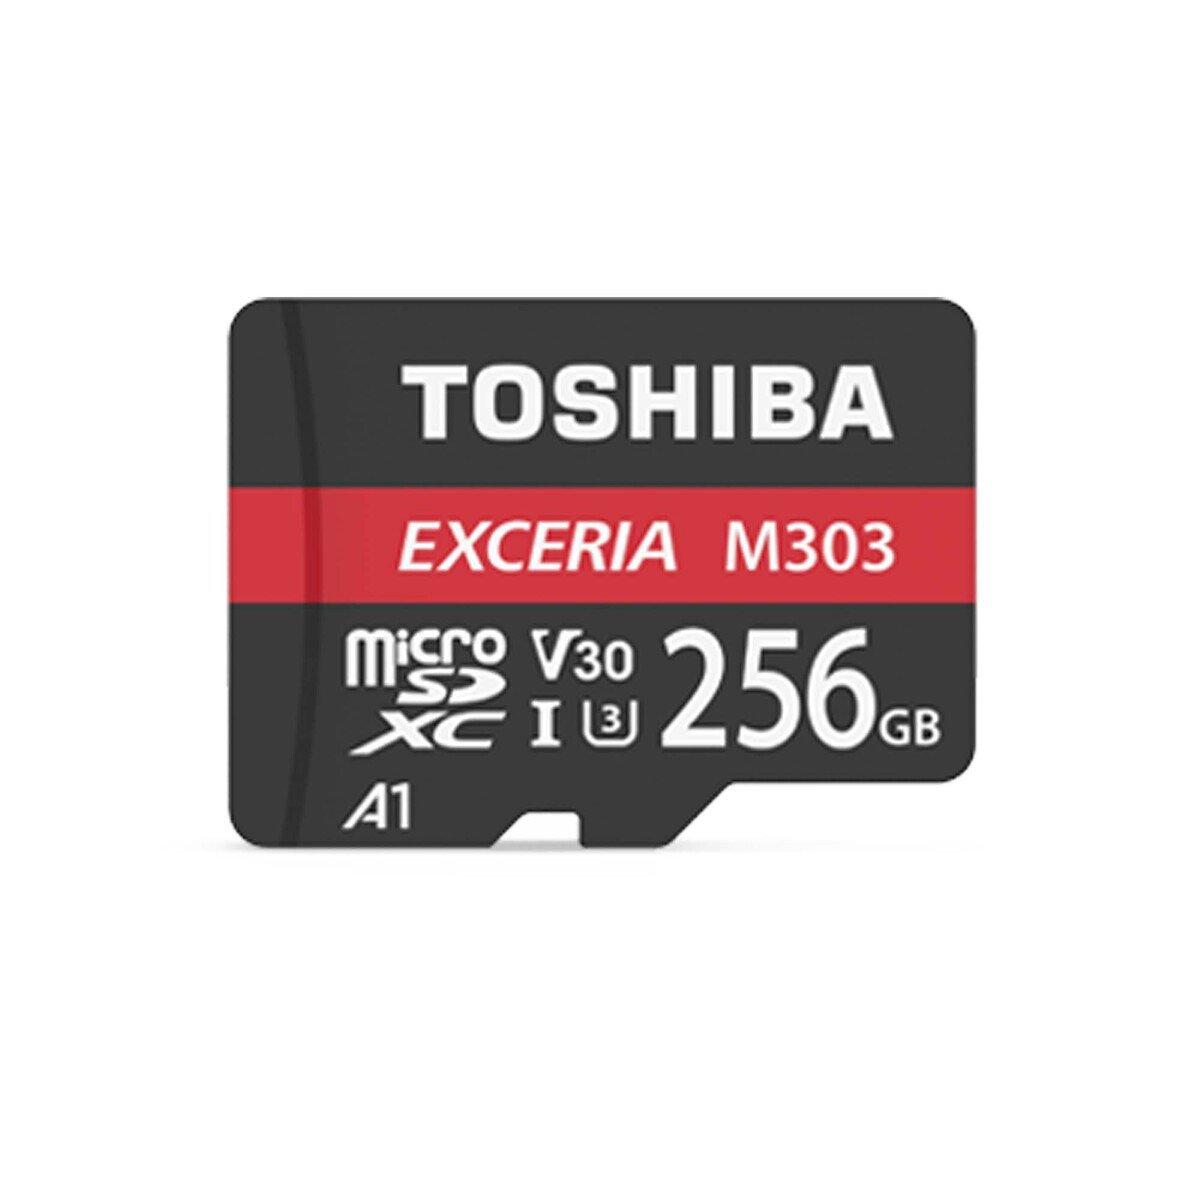 Toshiba MSD Card NM303R2560E 256GB